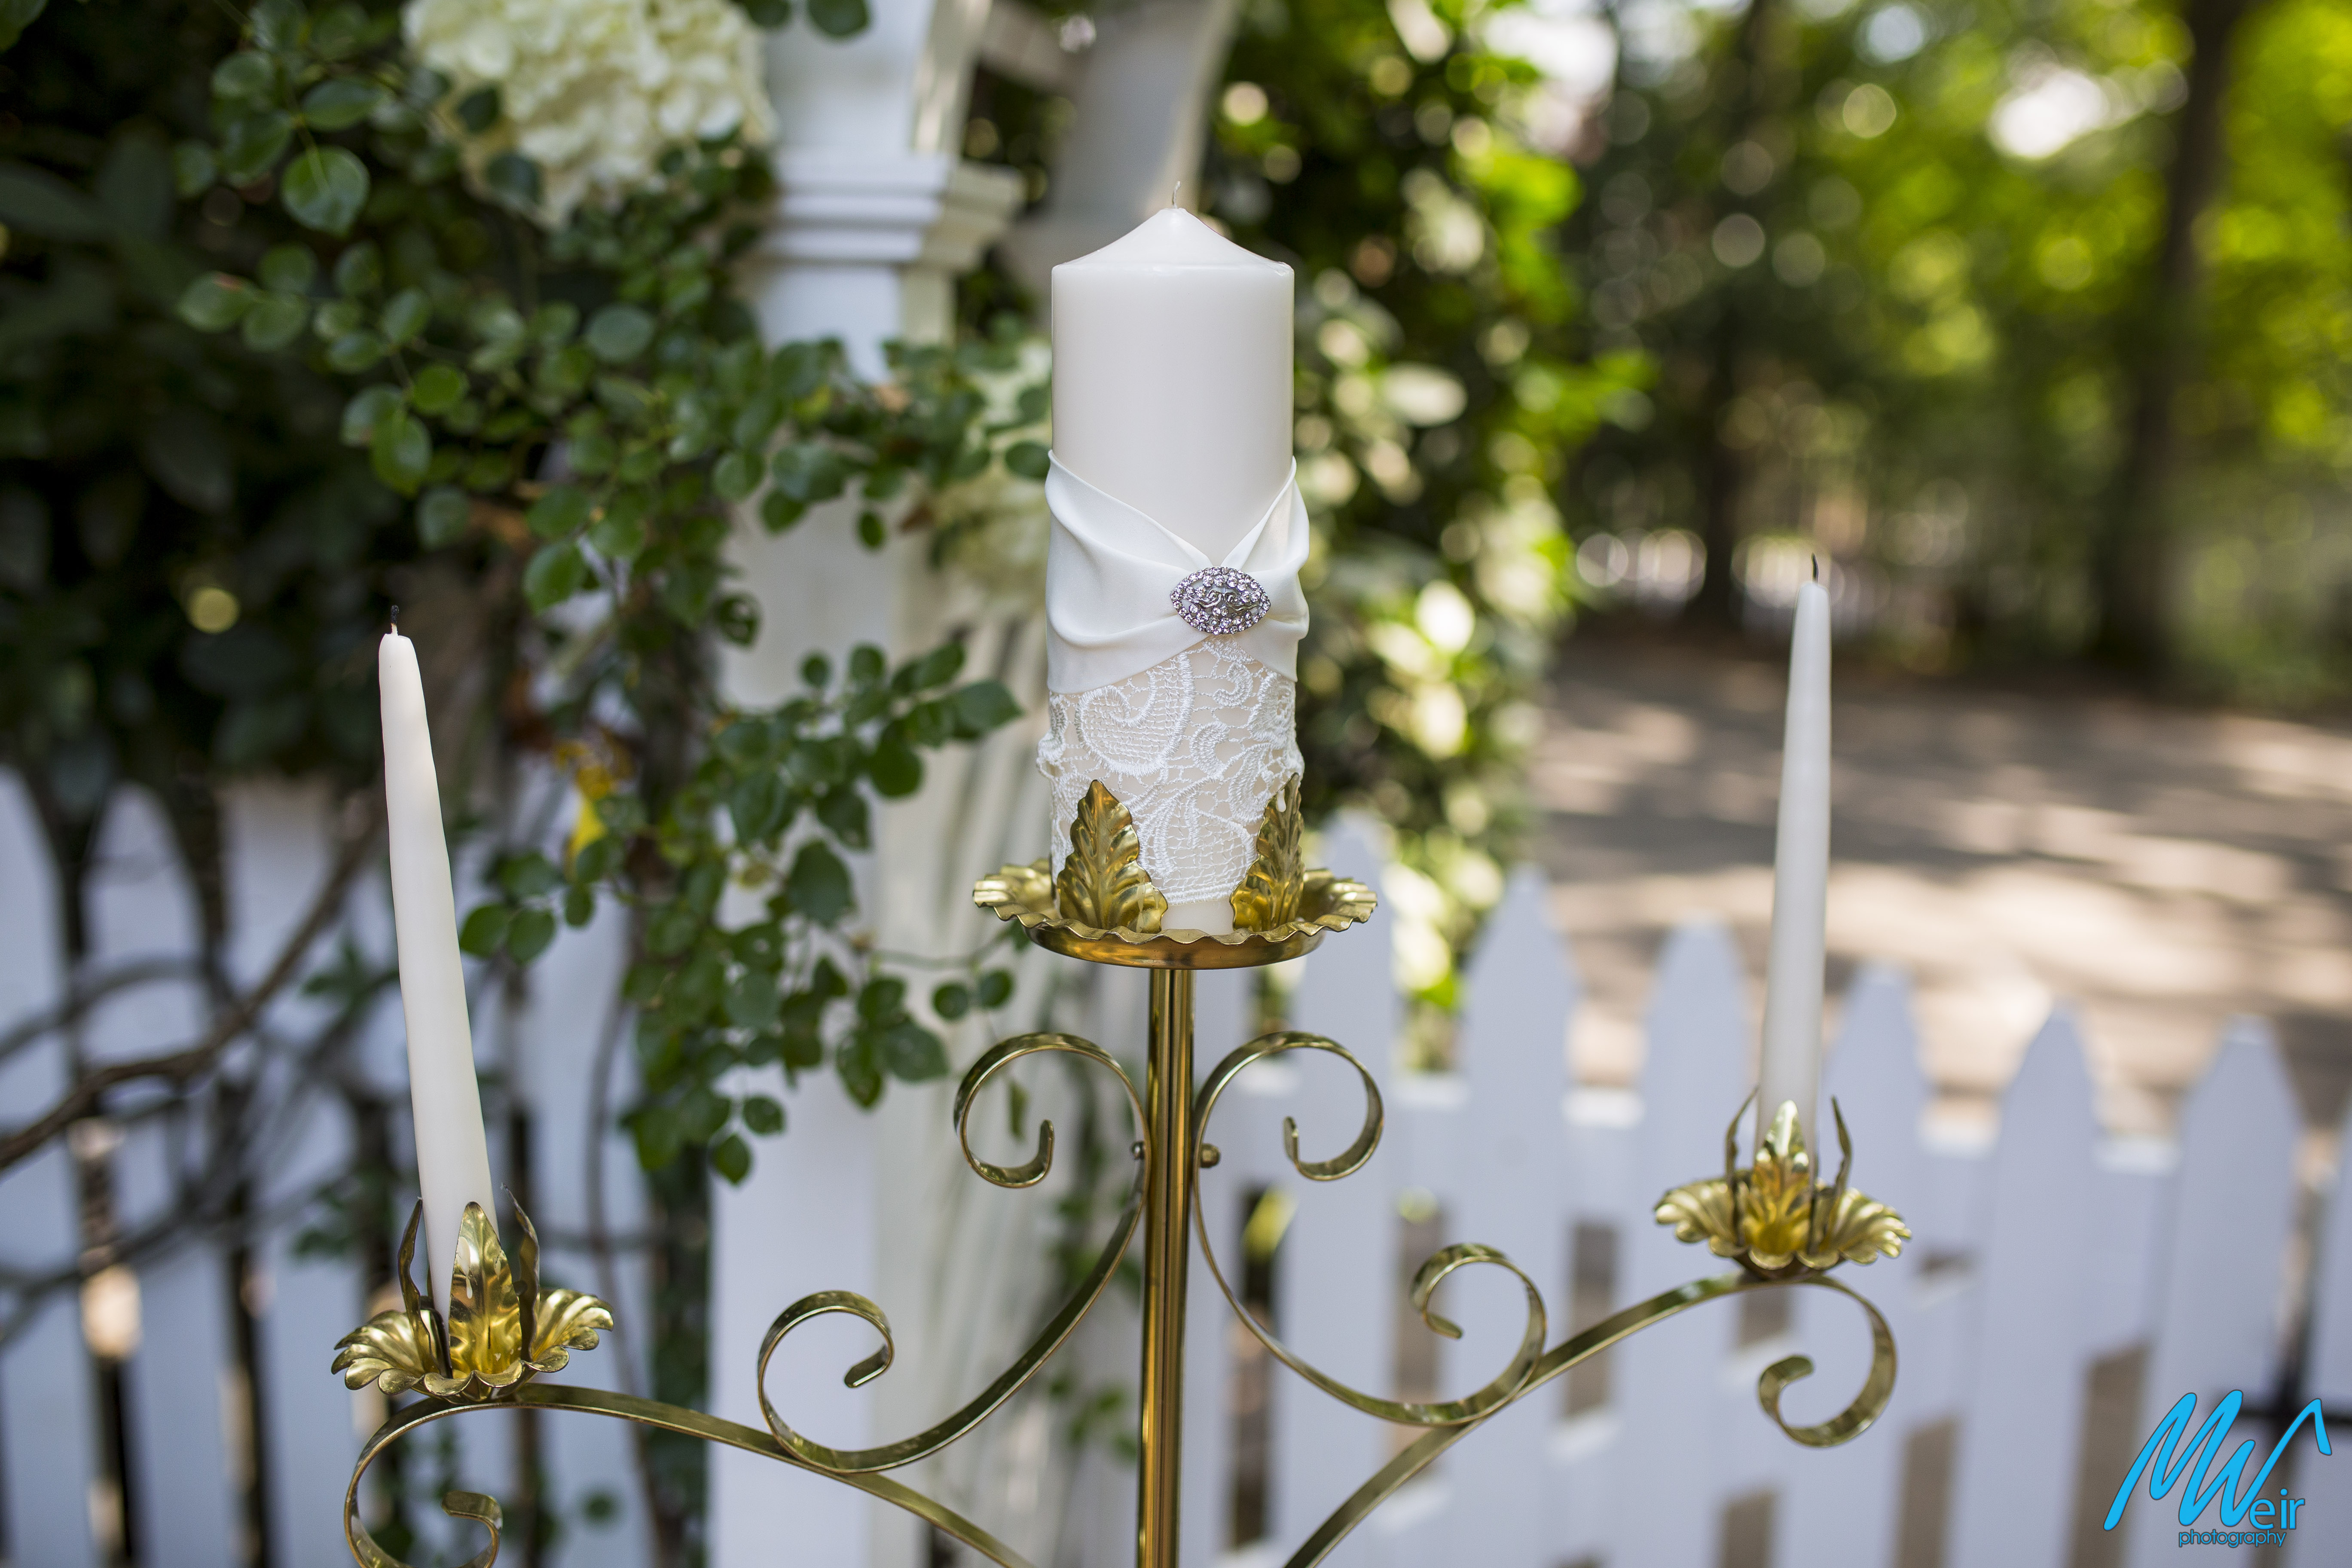 Unity Candle during wedding ceremony